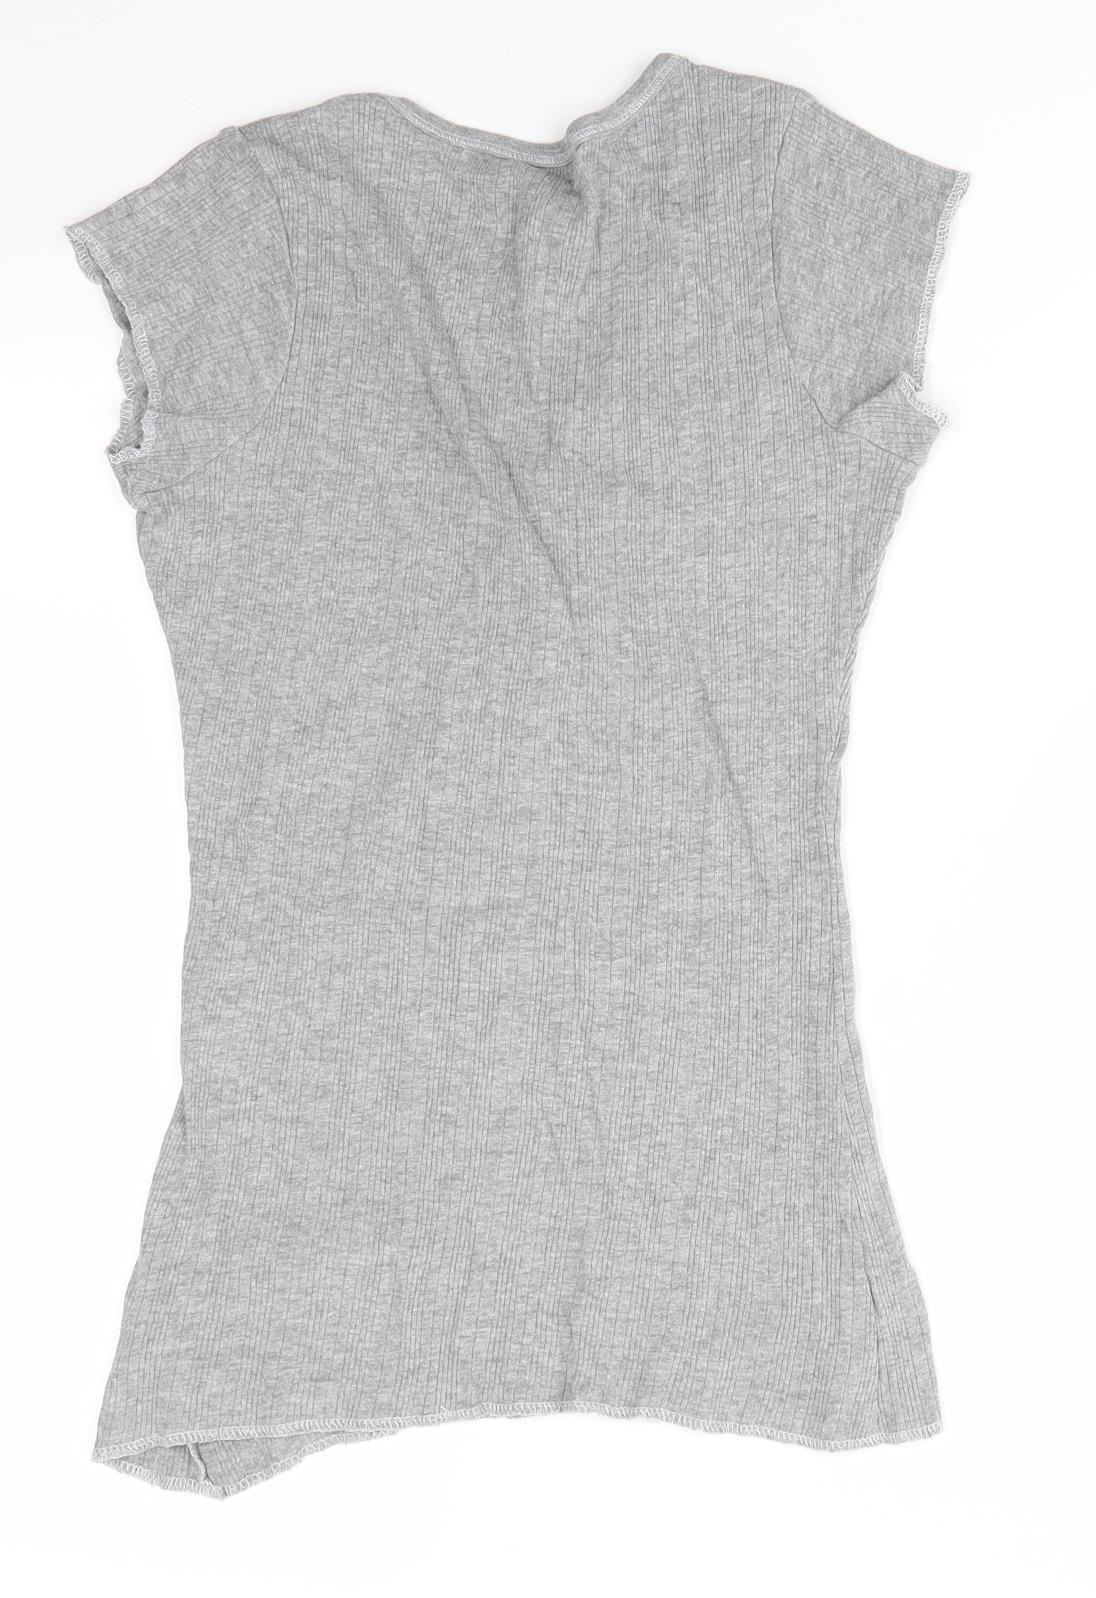 New Look Womens Grey Solid Cotton  Pyjama Top Size 12